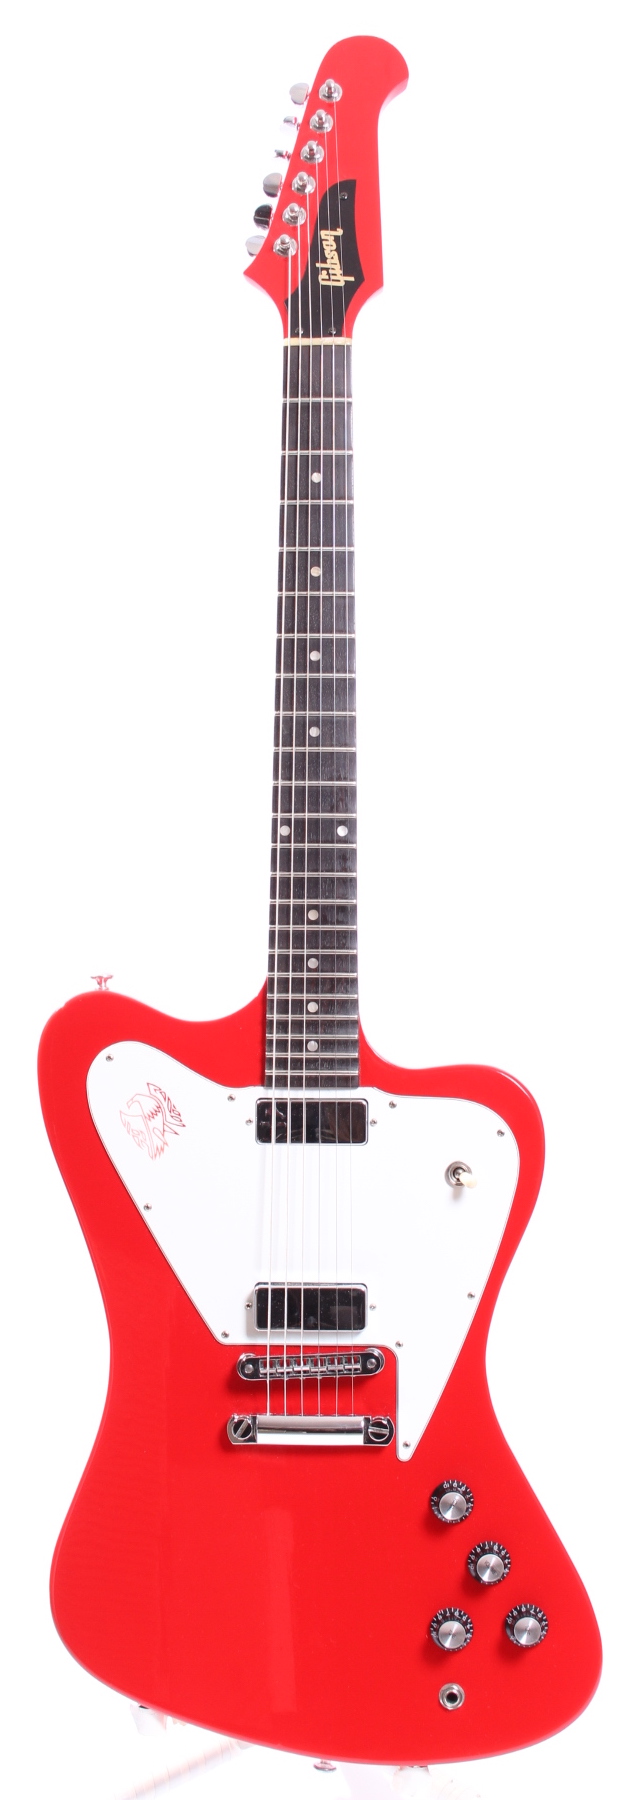 Gibson Firebird Non Reverse Limited Edition 2015 Ferrari Red Guitar For ...